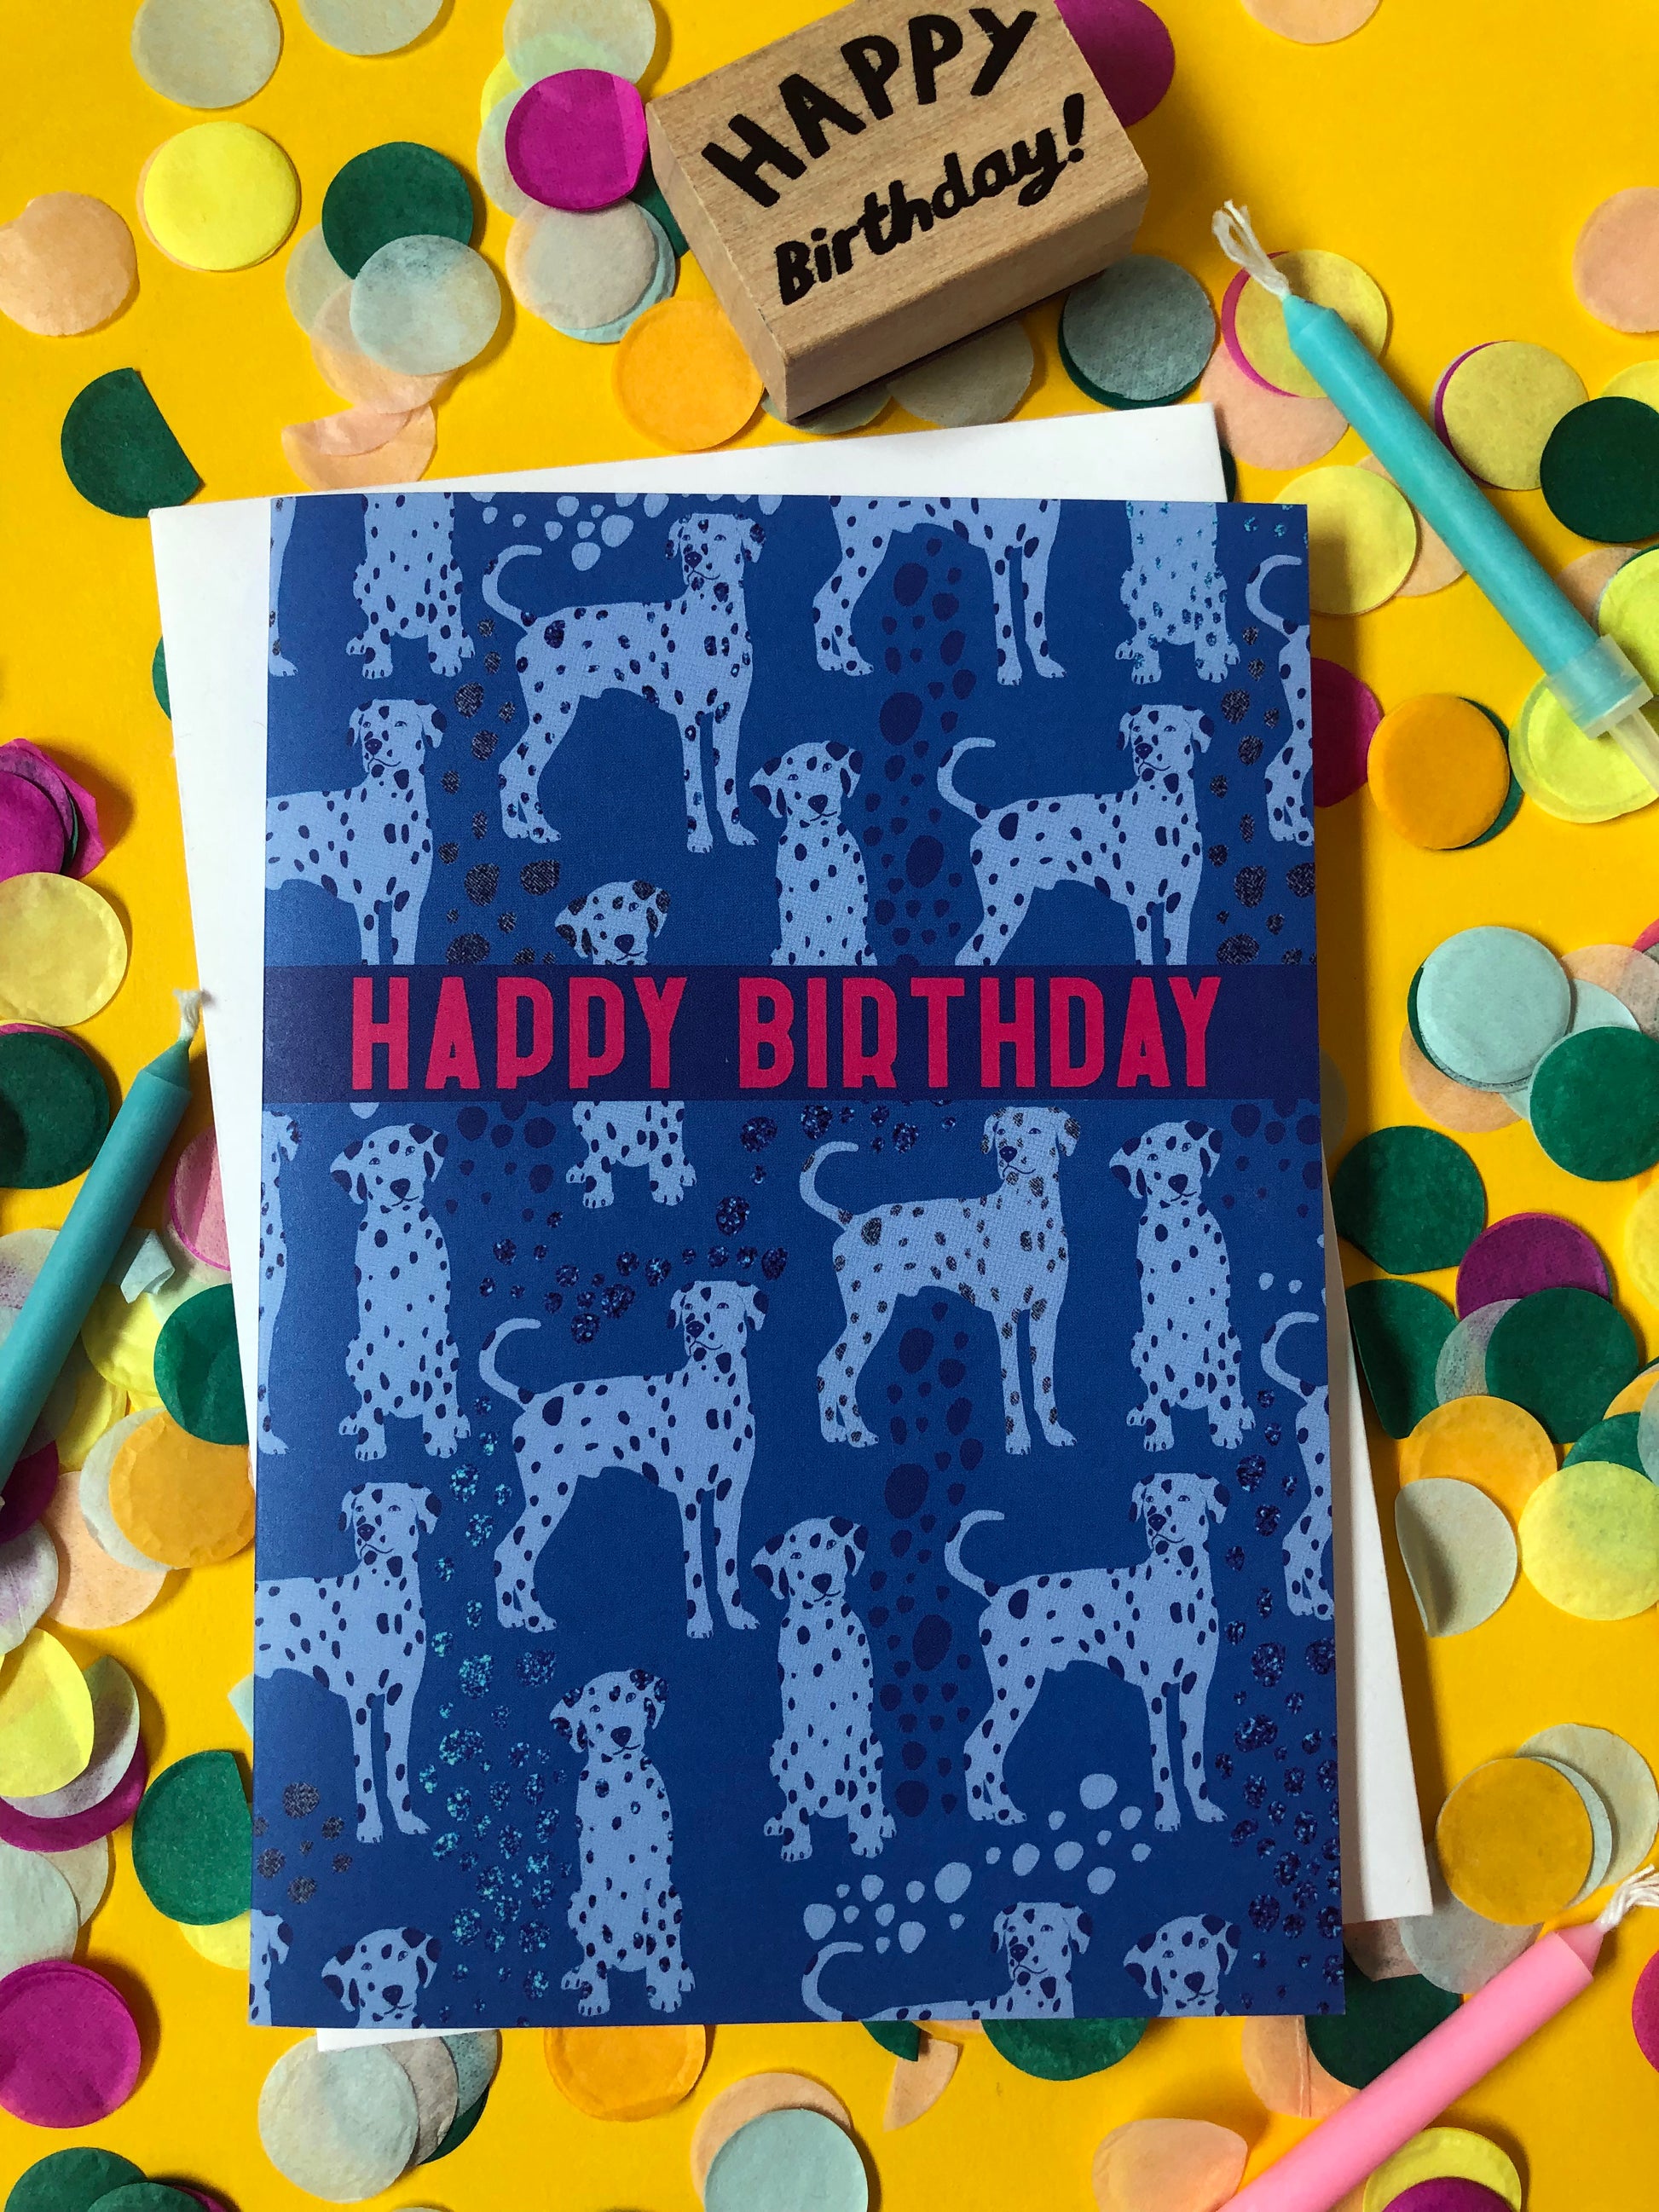 Blue Dalmatian print birthday card featuring a cute dog design on a confetti background.